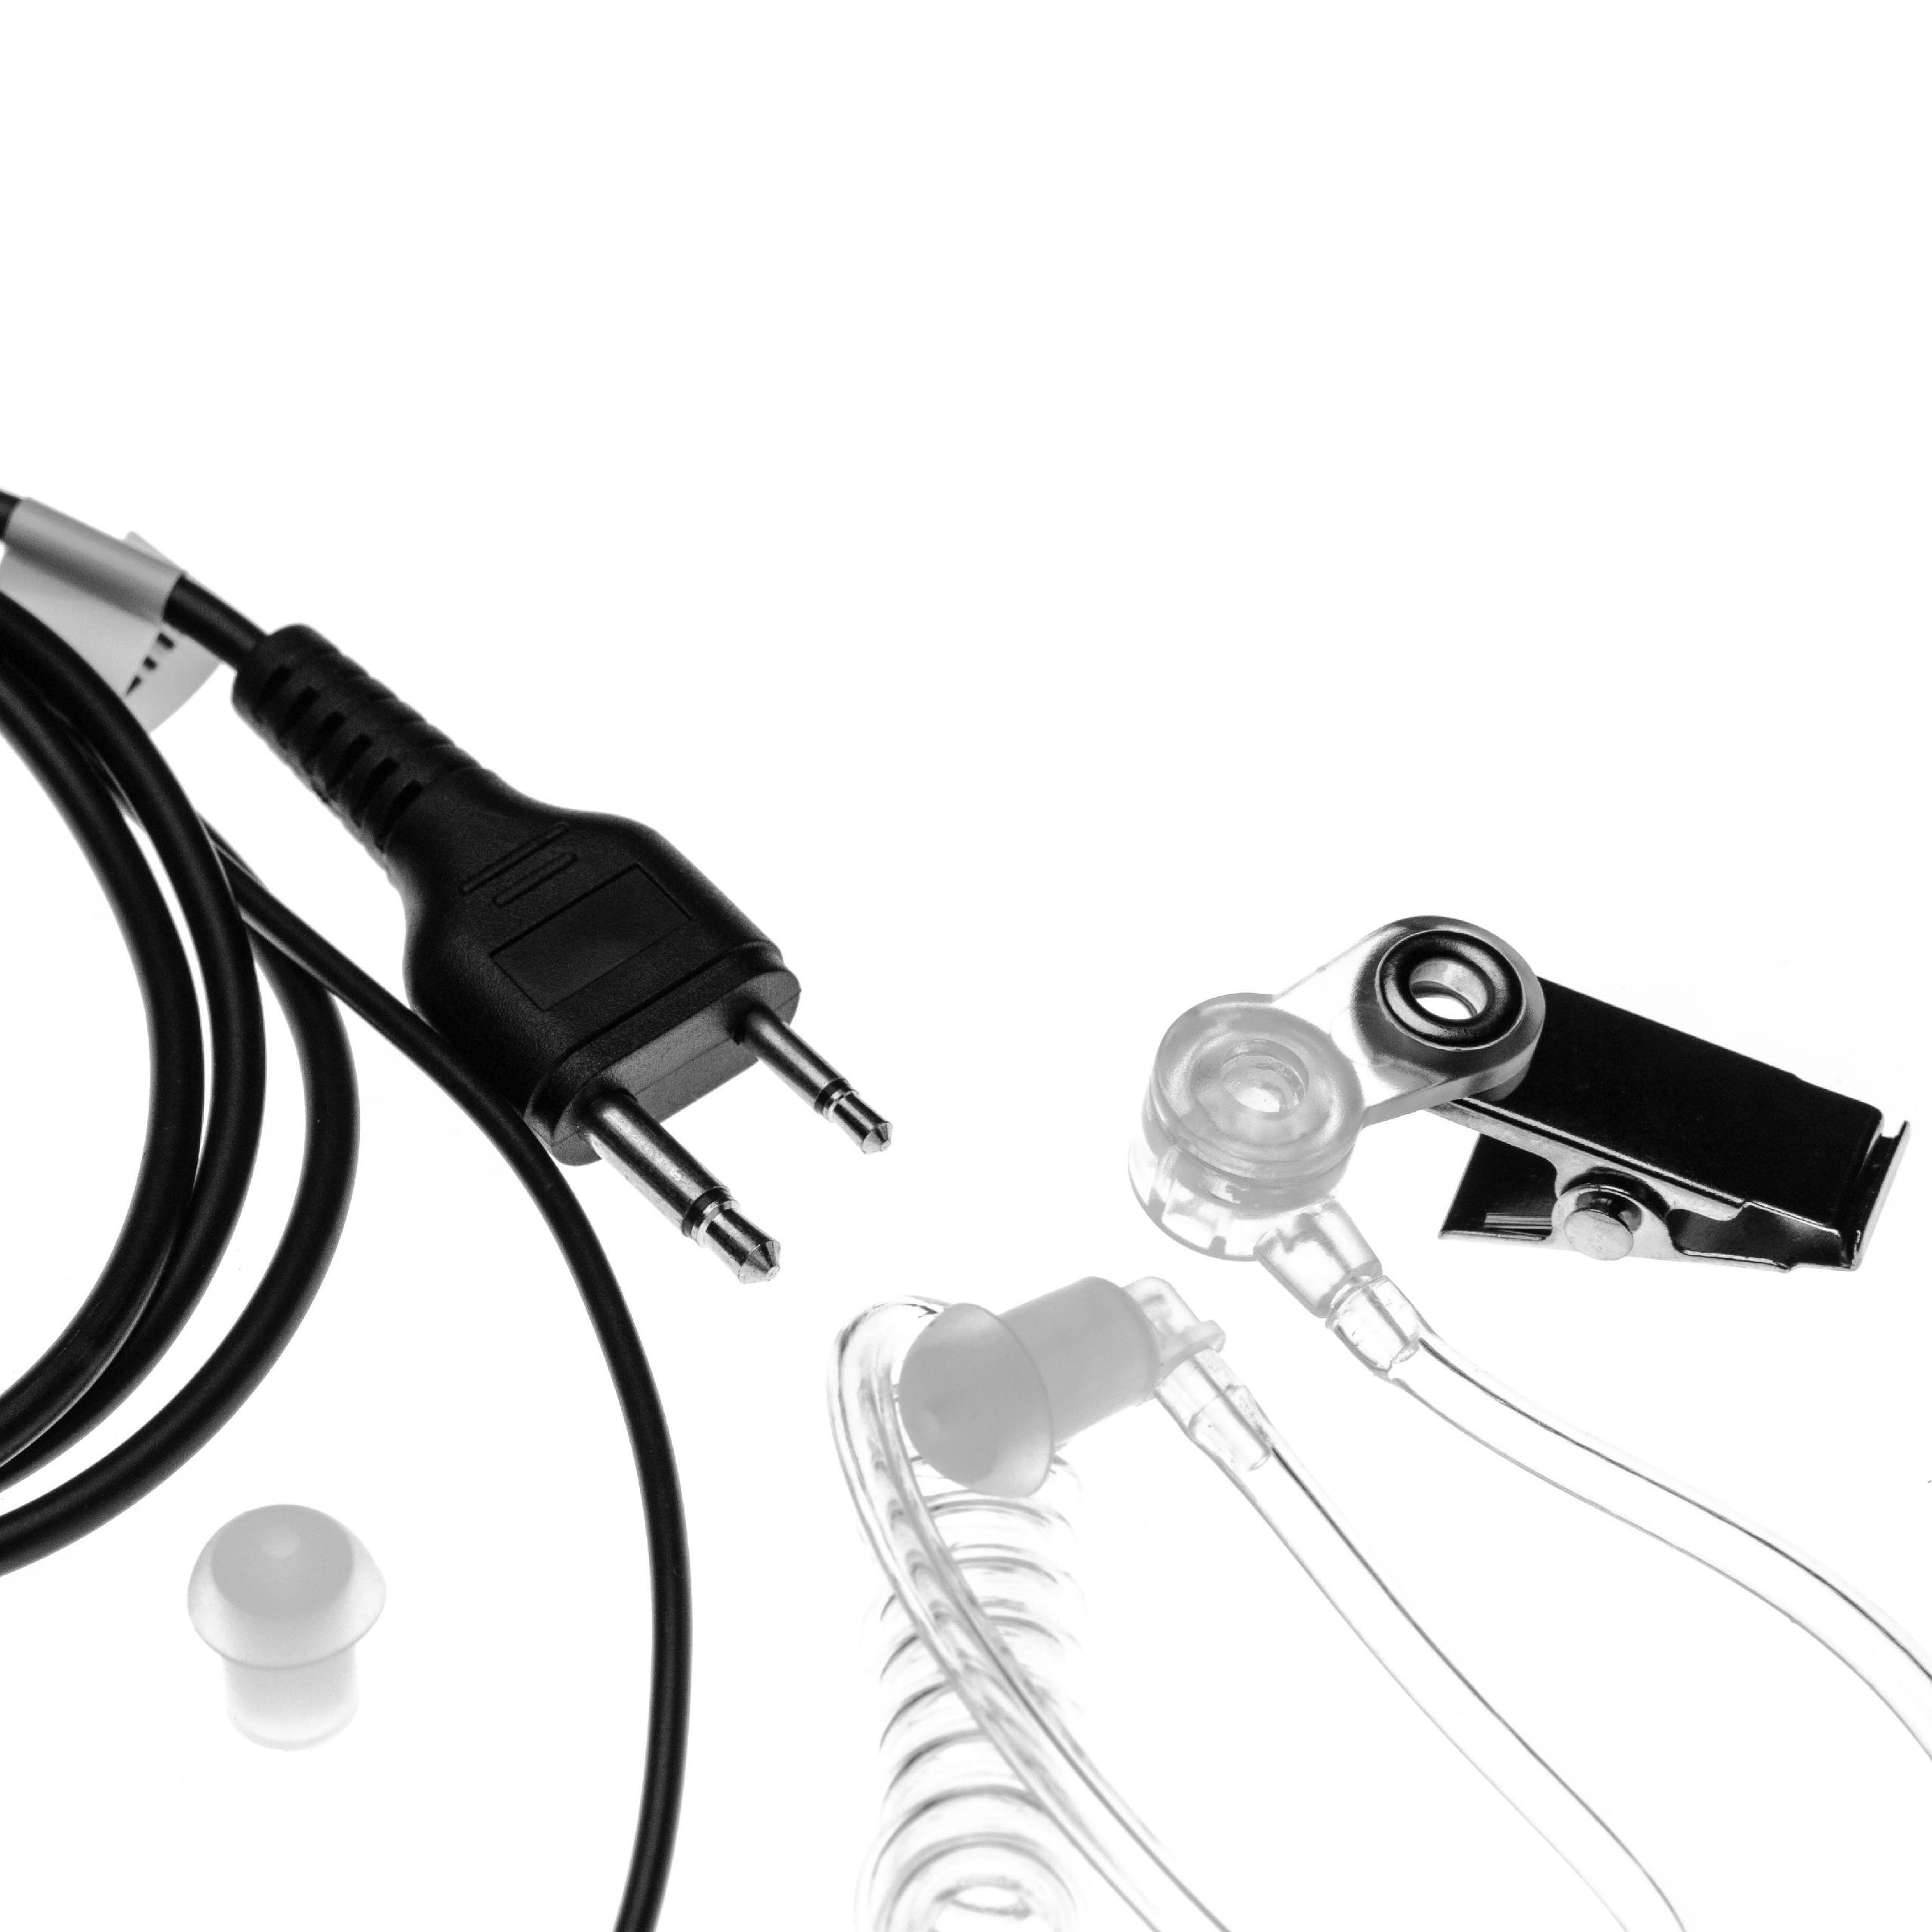 VHBW kompatibel mit IC-X2A, schwarz IC-W32A, / IC-X21ET, IC-X21AT, IC-Z1A, IC-X2E, On-ear Headset IC-W32E, IC-Z1E, Icom transparent